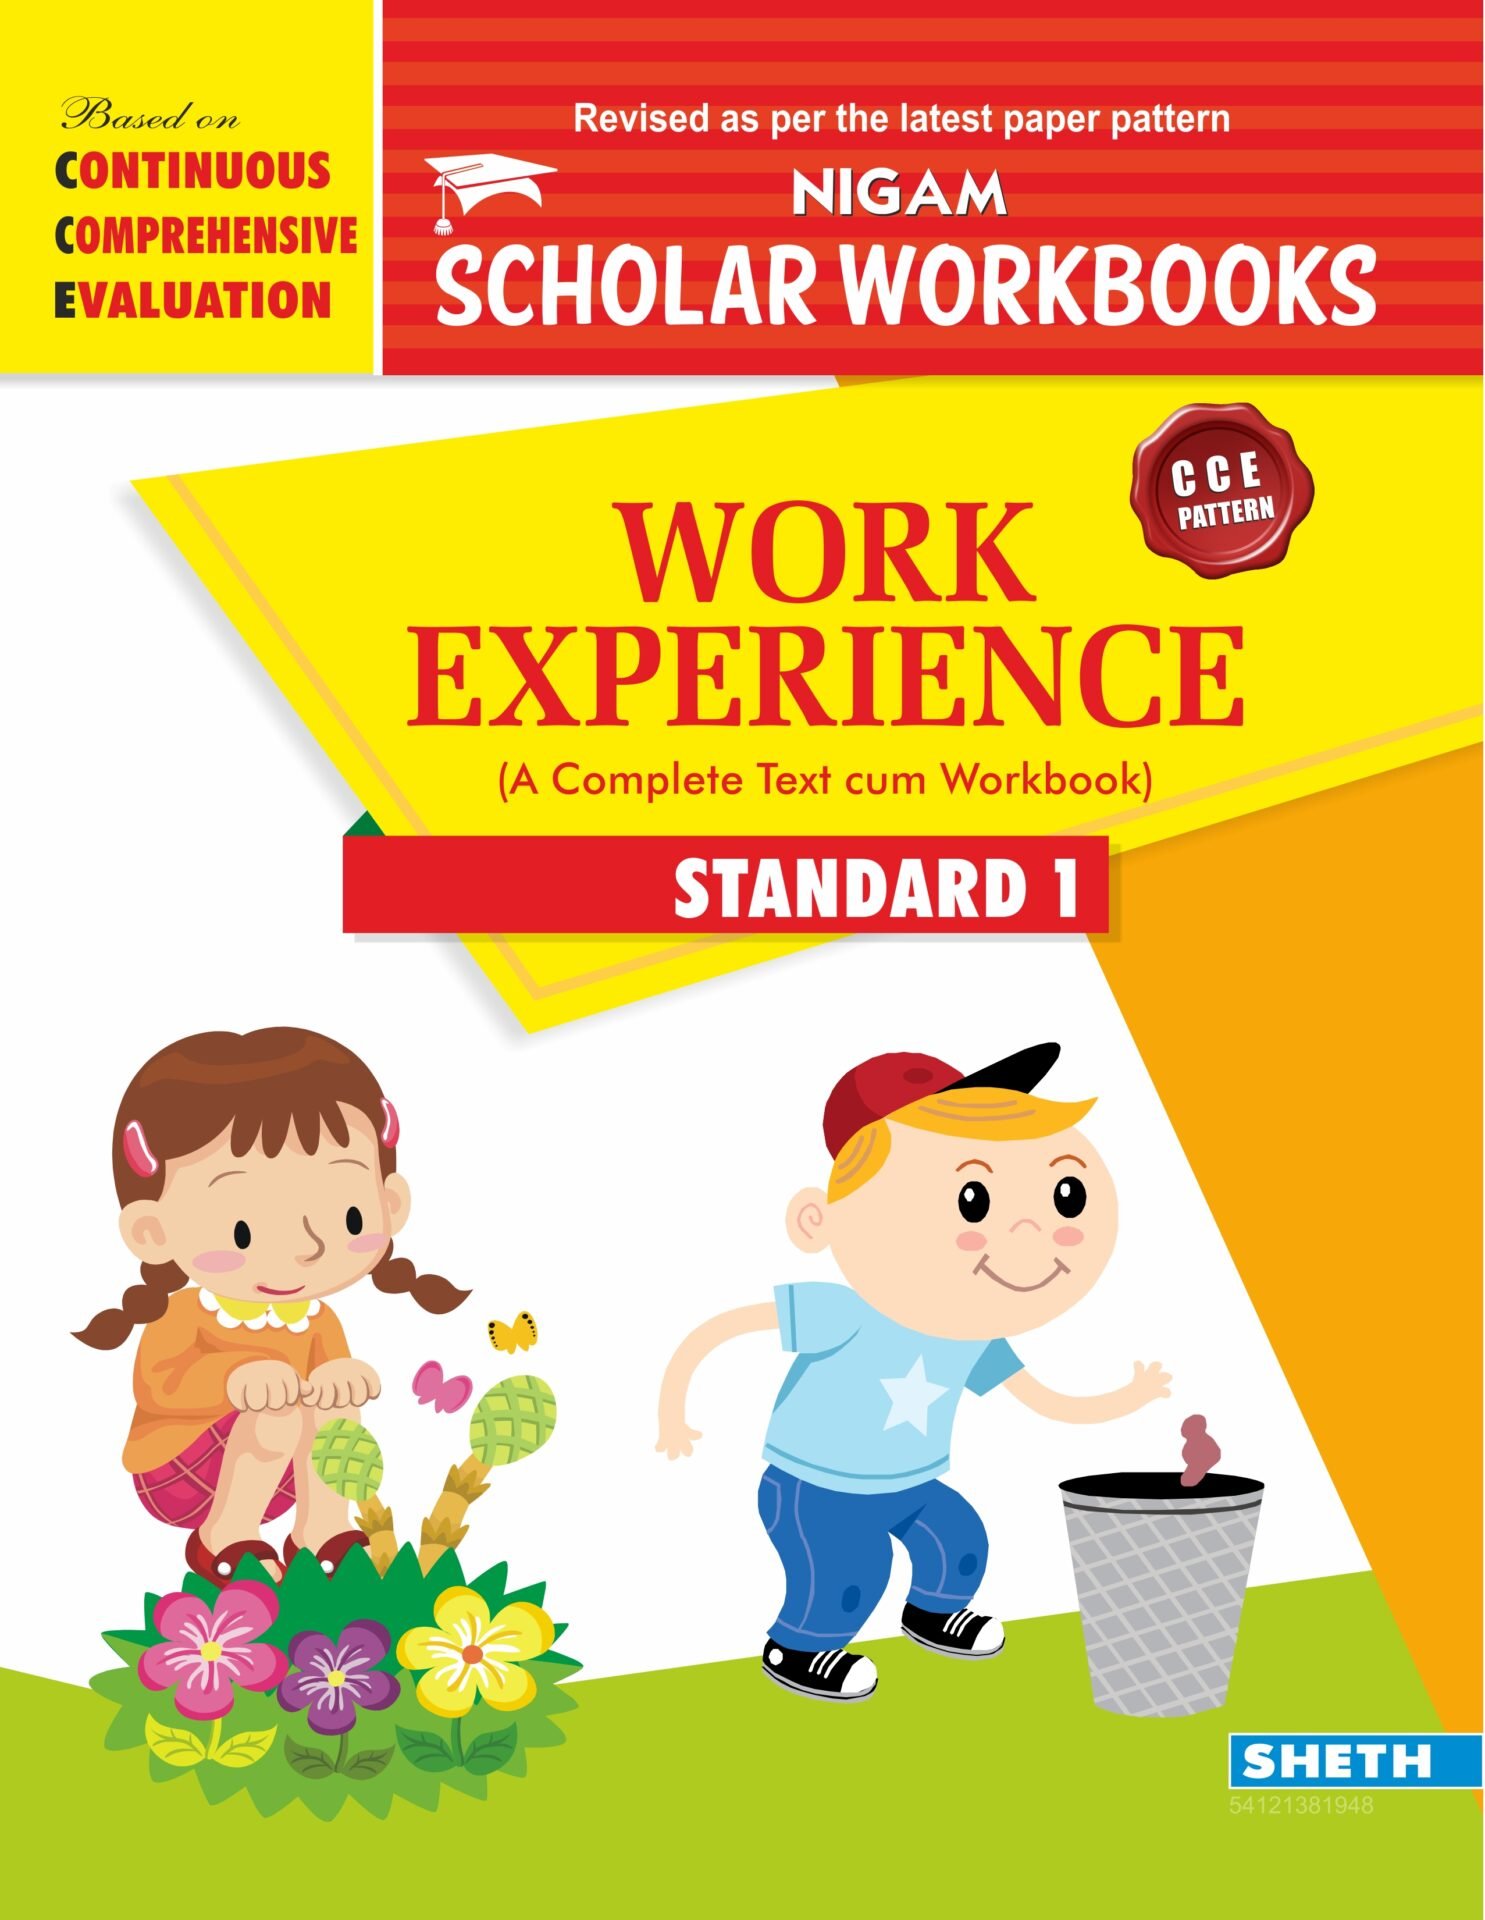 CCE Pattern Nigam Scholar Workbooks Work Experience Standard 1 1